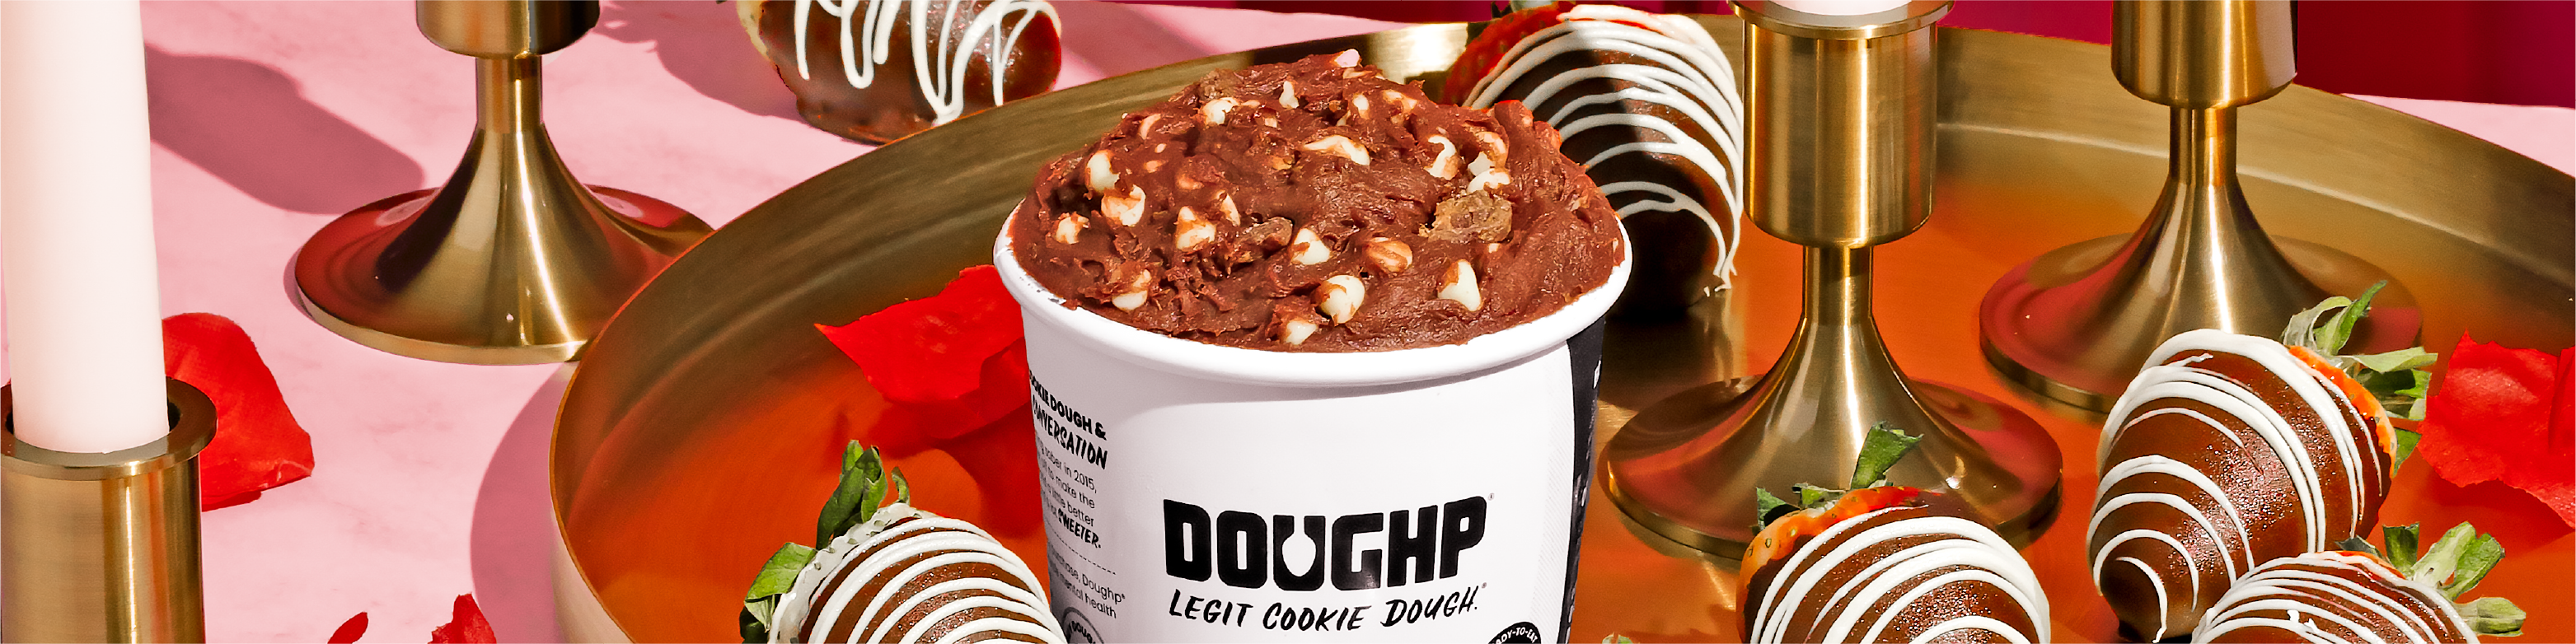 Valentine’s Day Gift Idea: Doughp Subscription & Date Night!